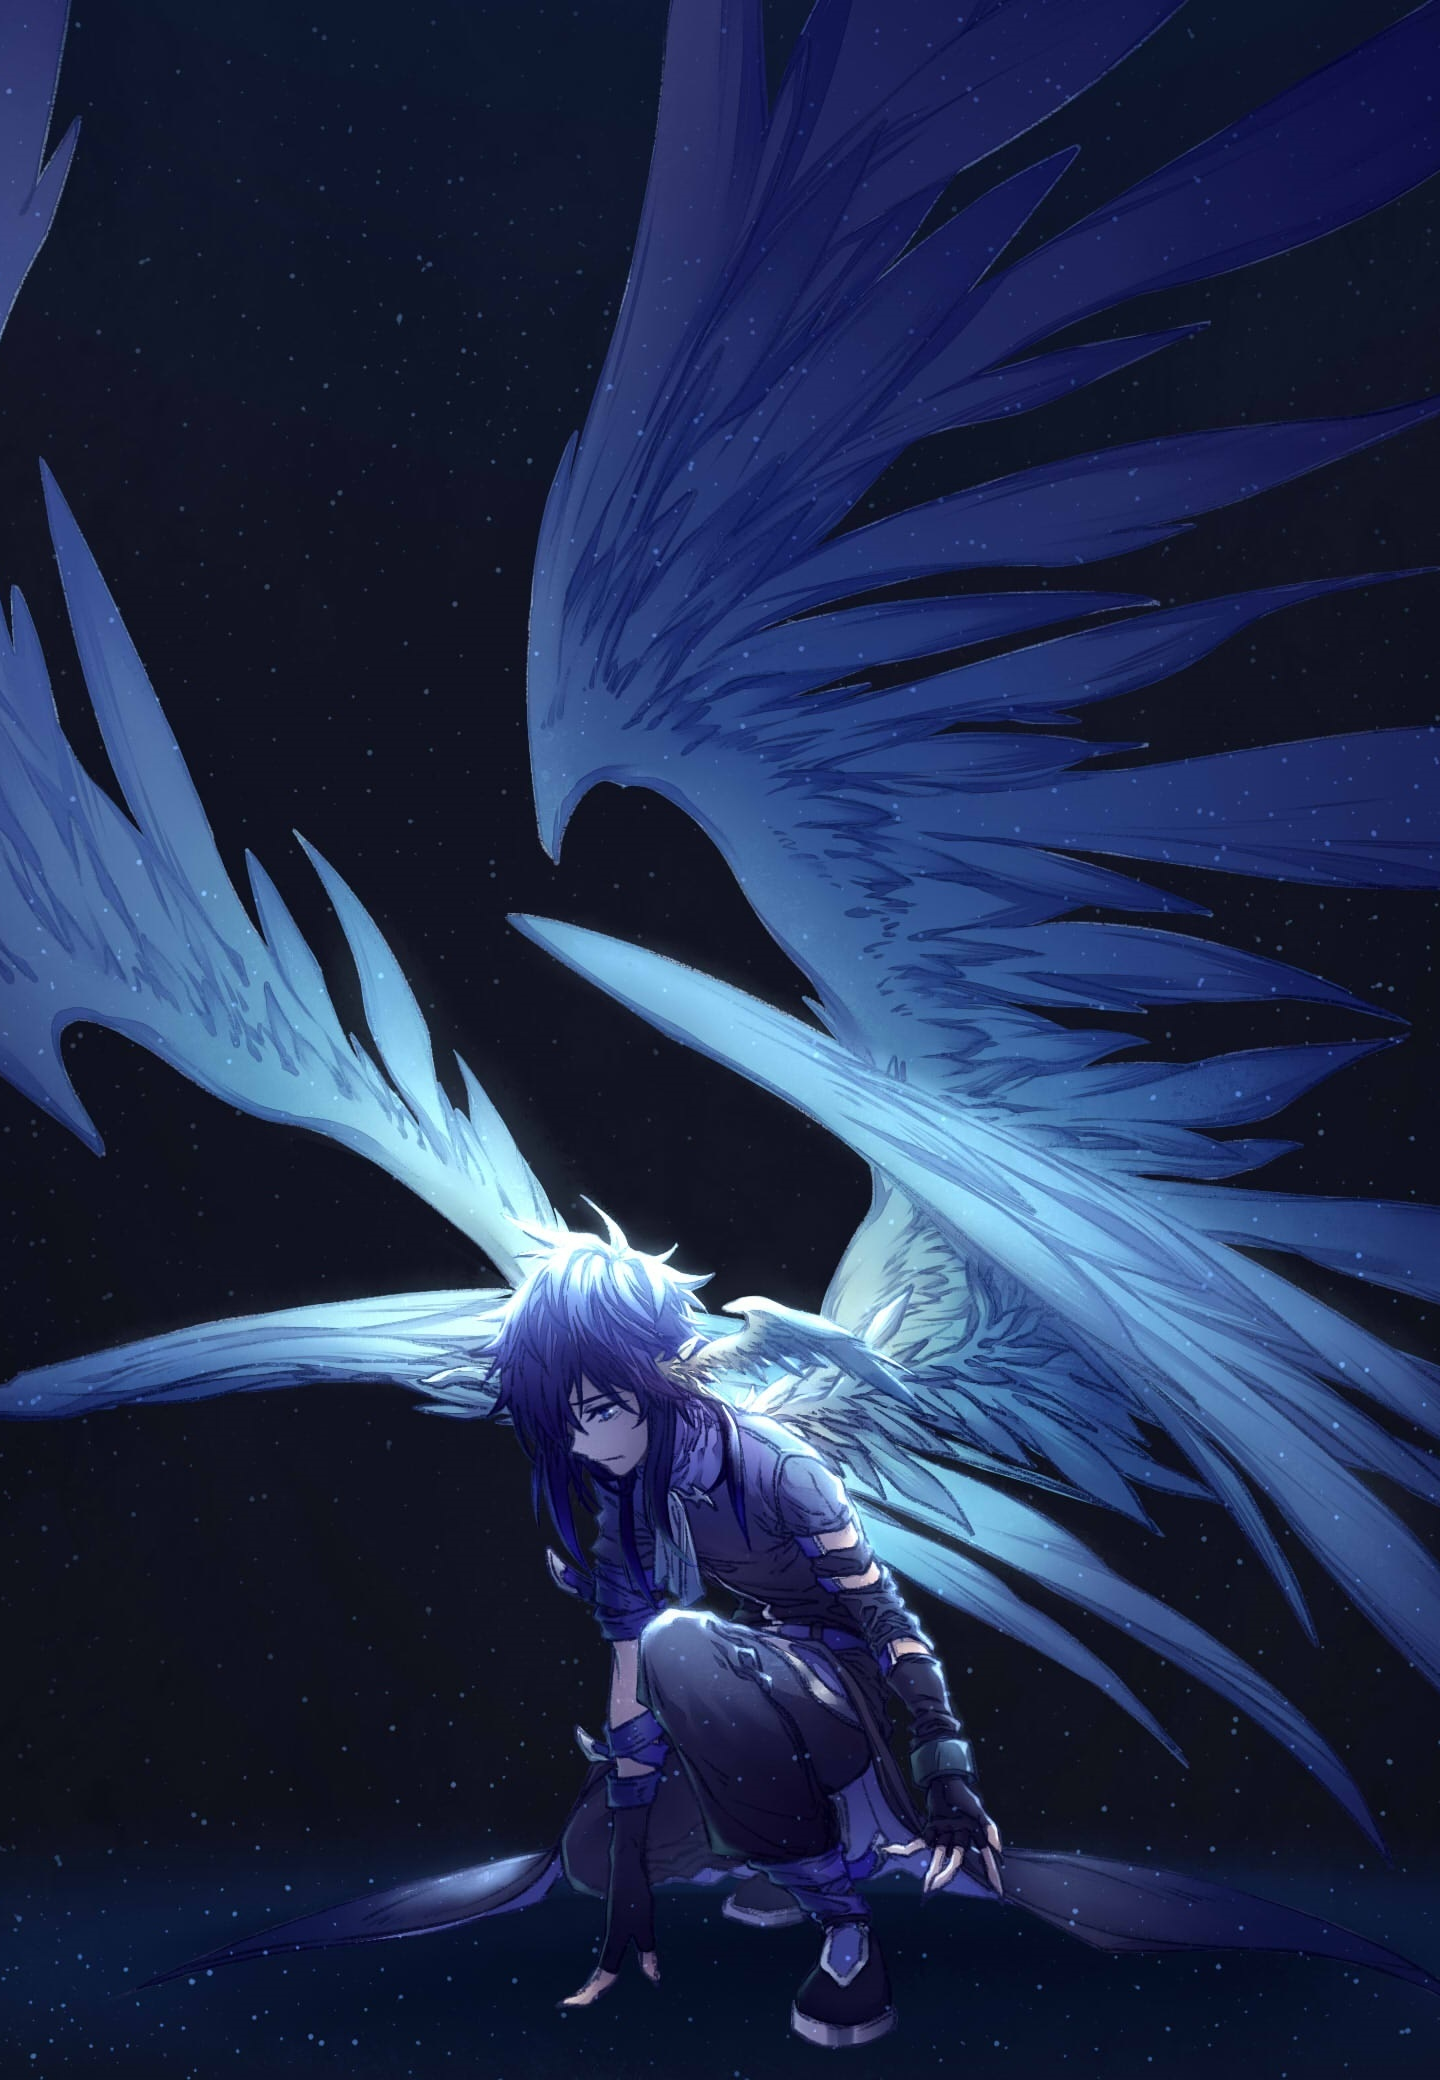 Download 1440x2960 Wallpaper Dark Big Wings Angel Fantasy